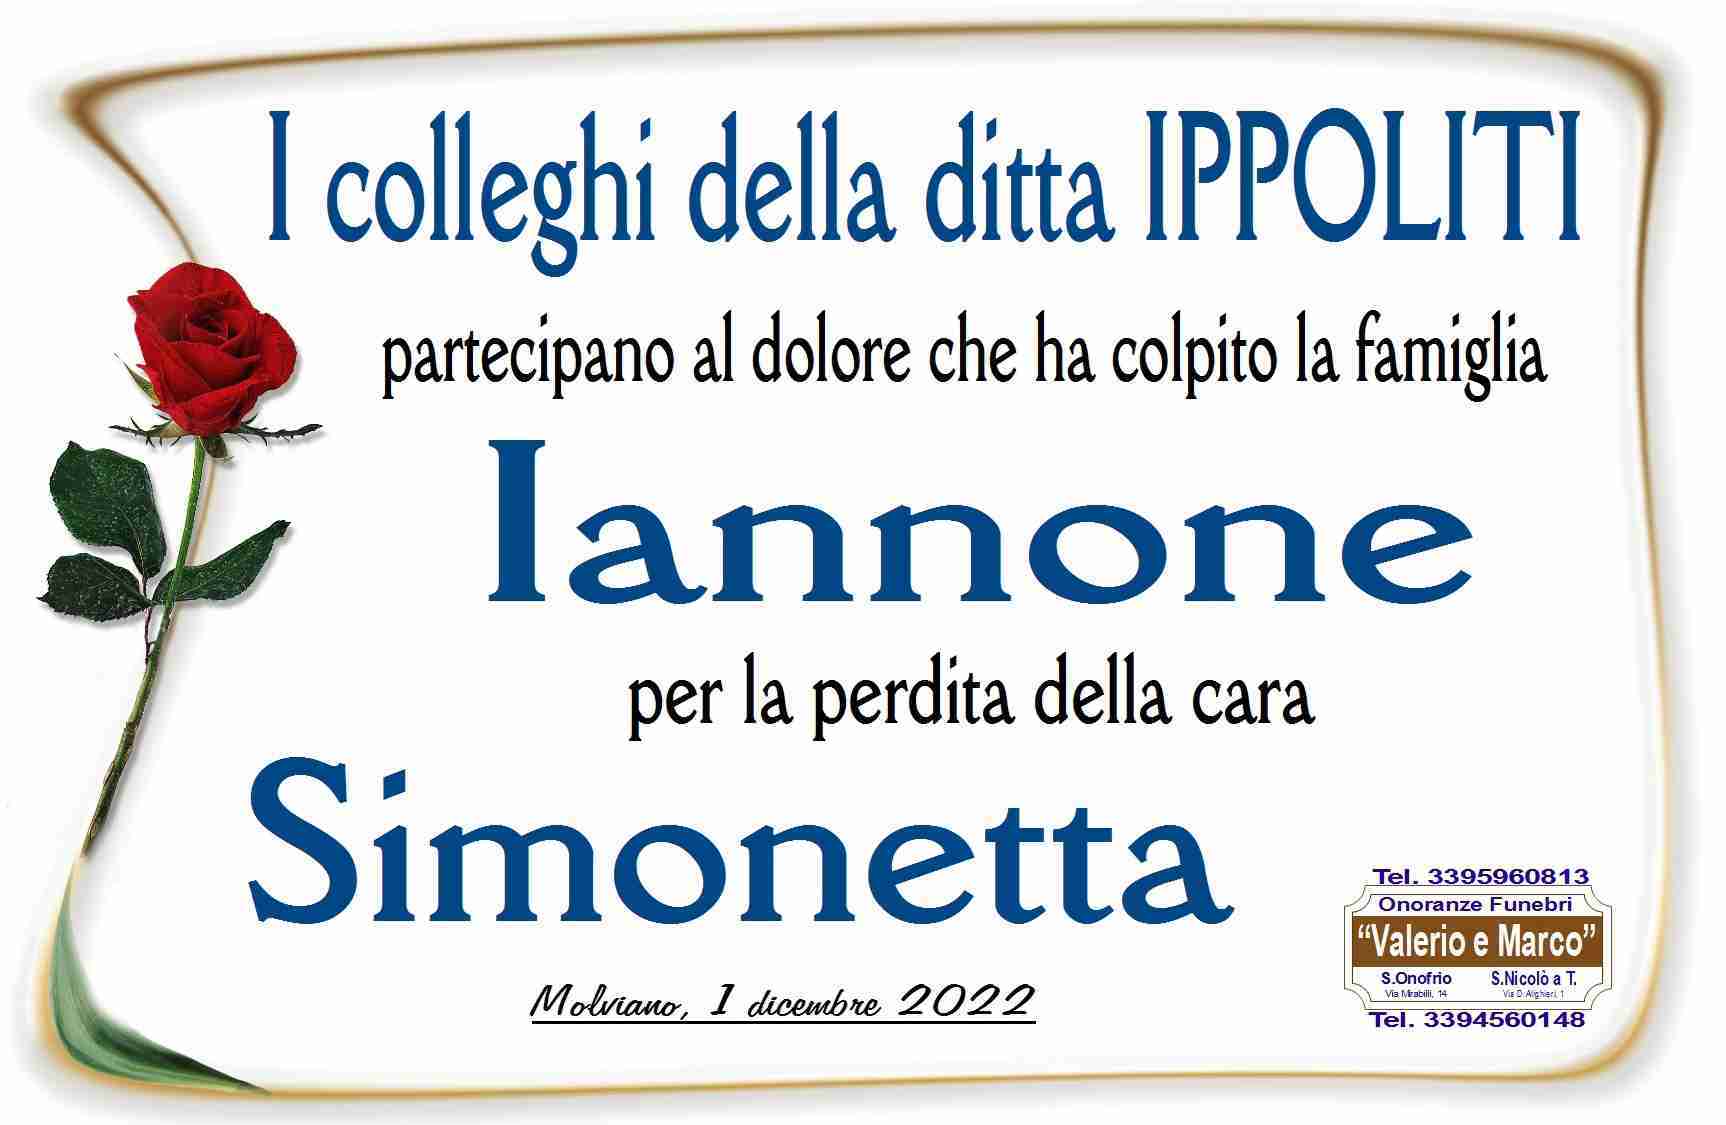 Simonetta Iannone